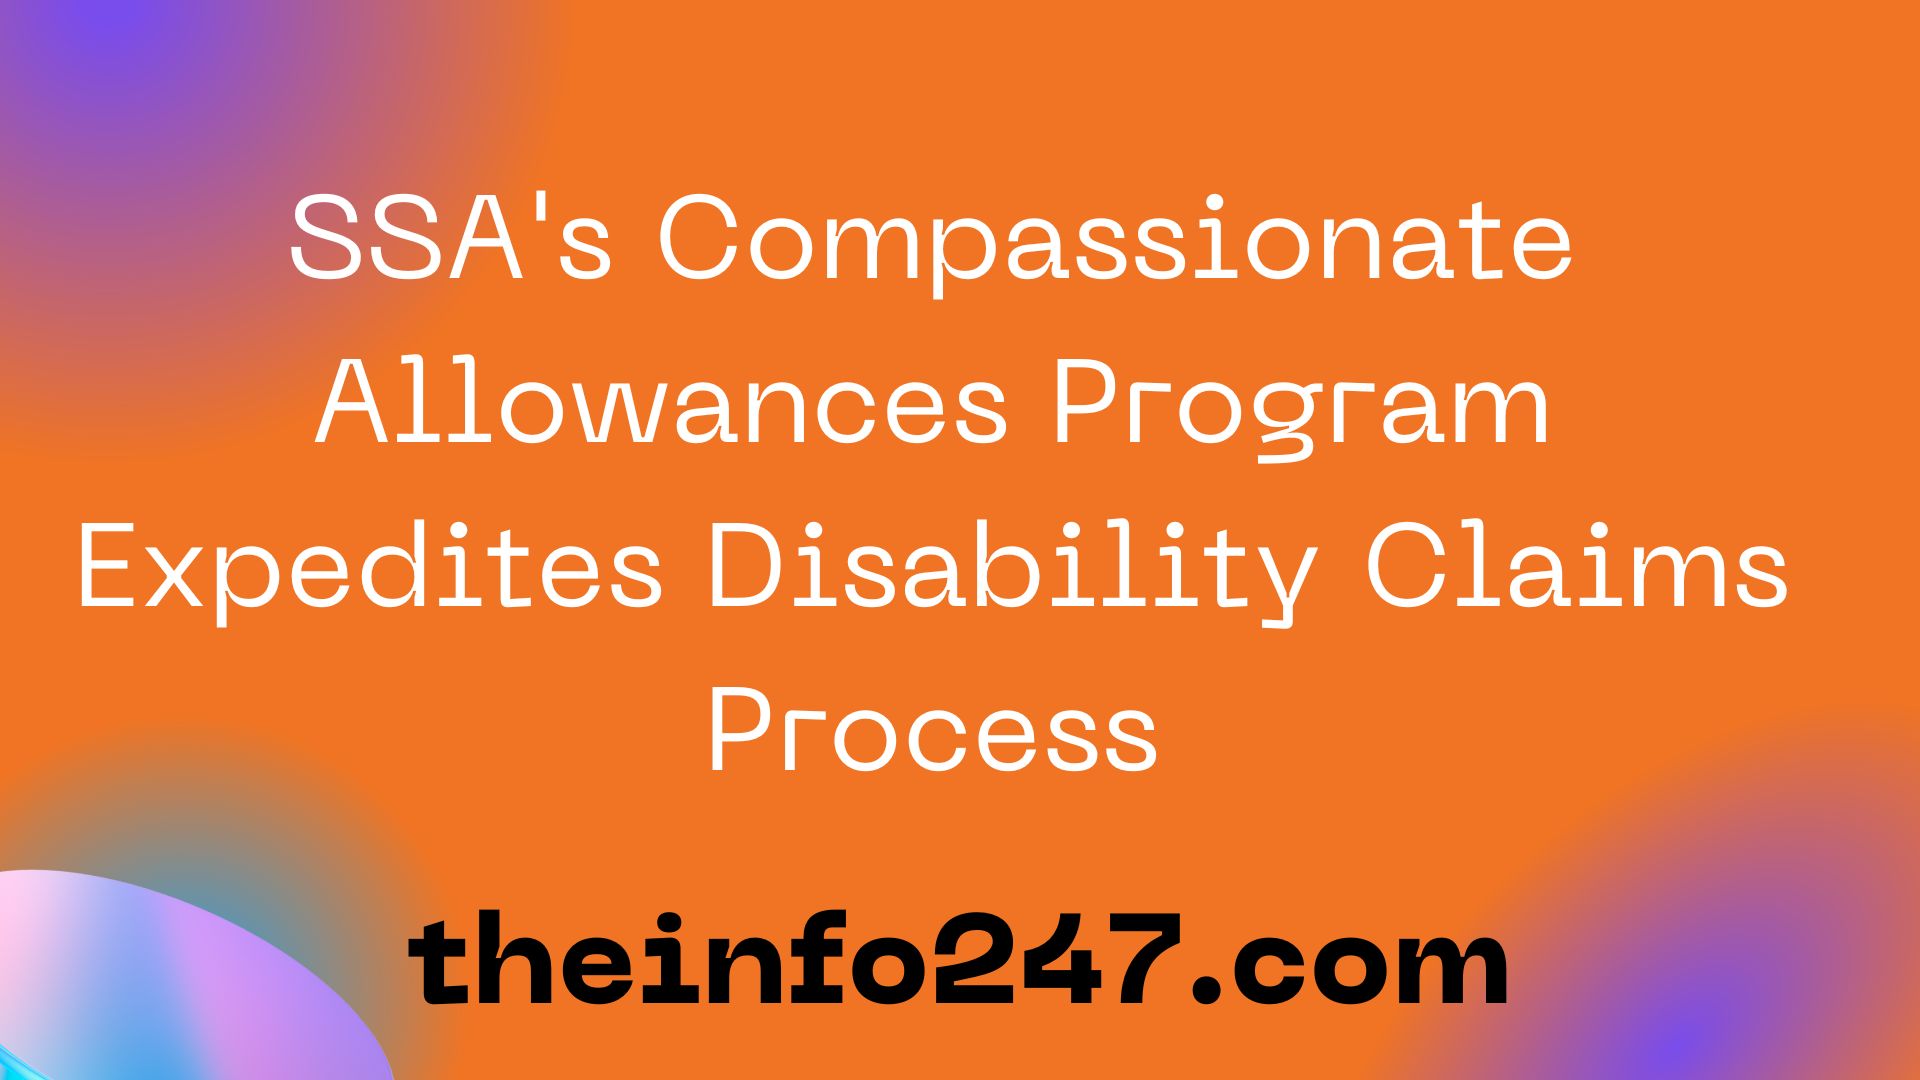 SSA's Compassionate Allowances Program Expedites Disability Claims Process